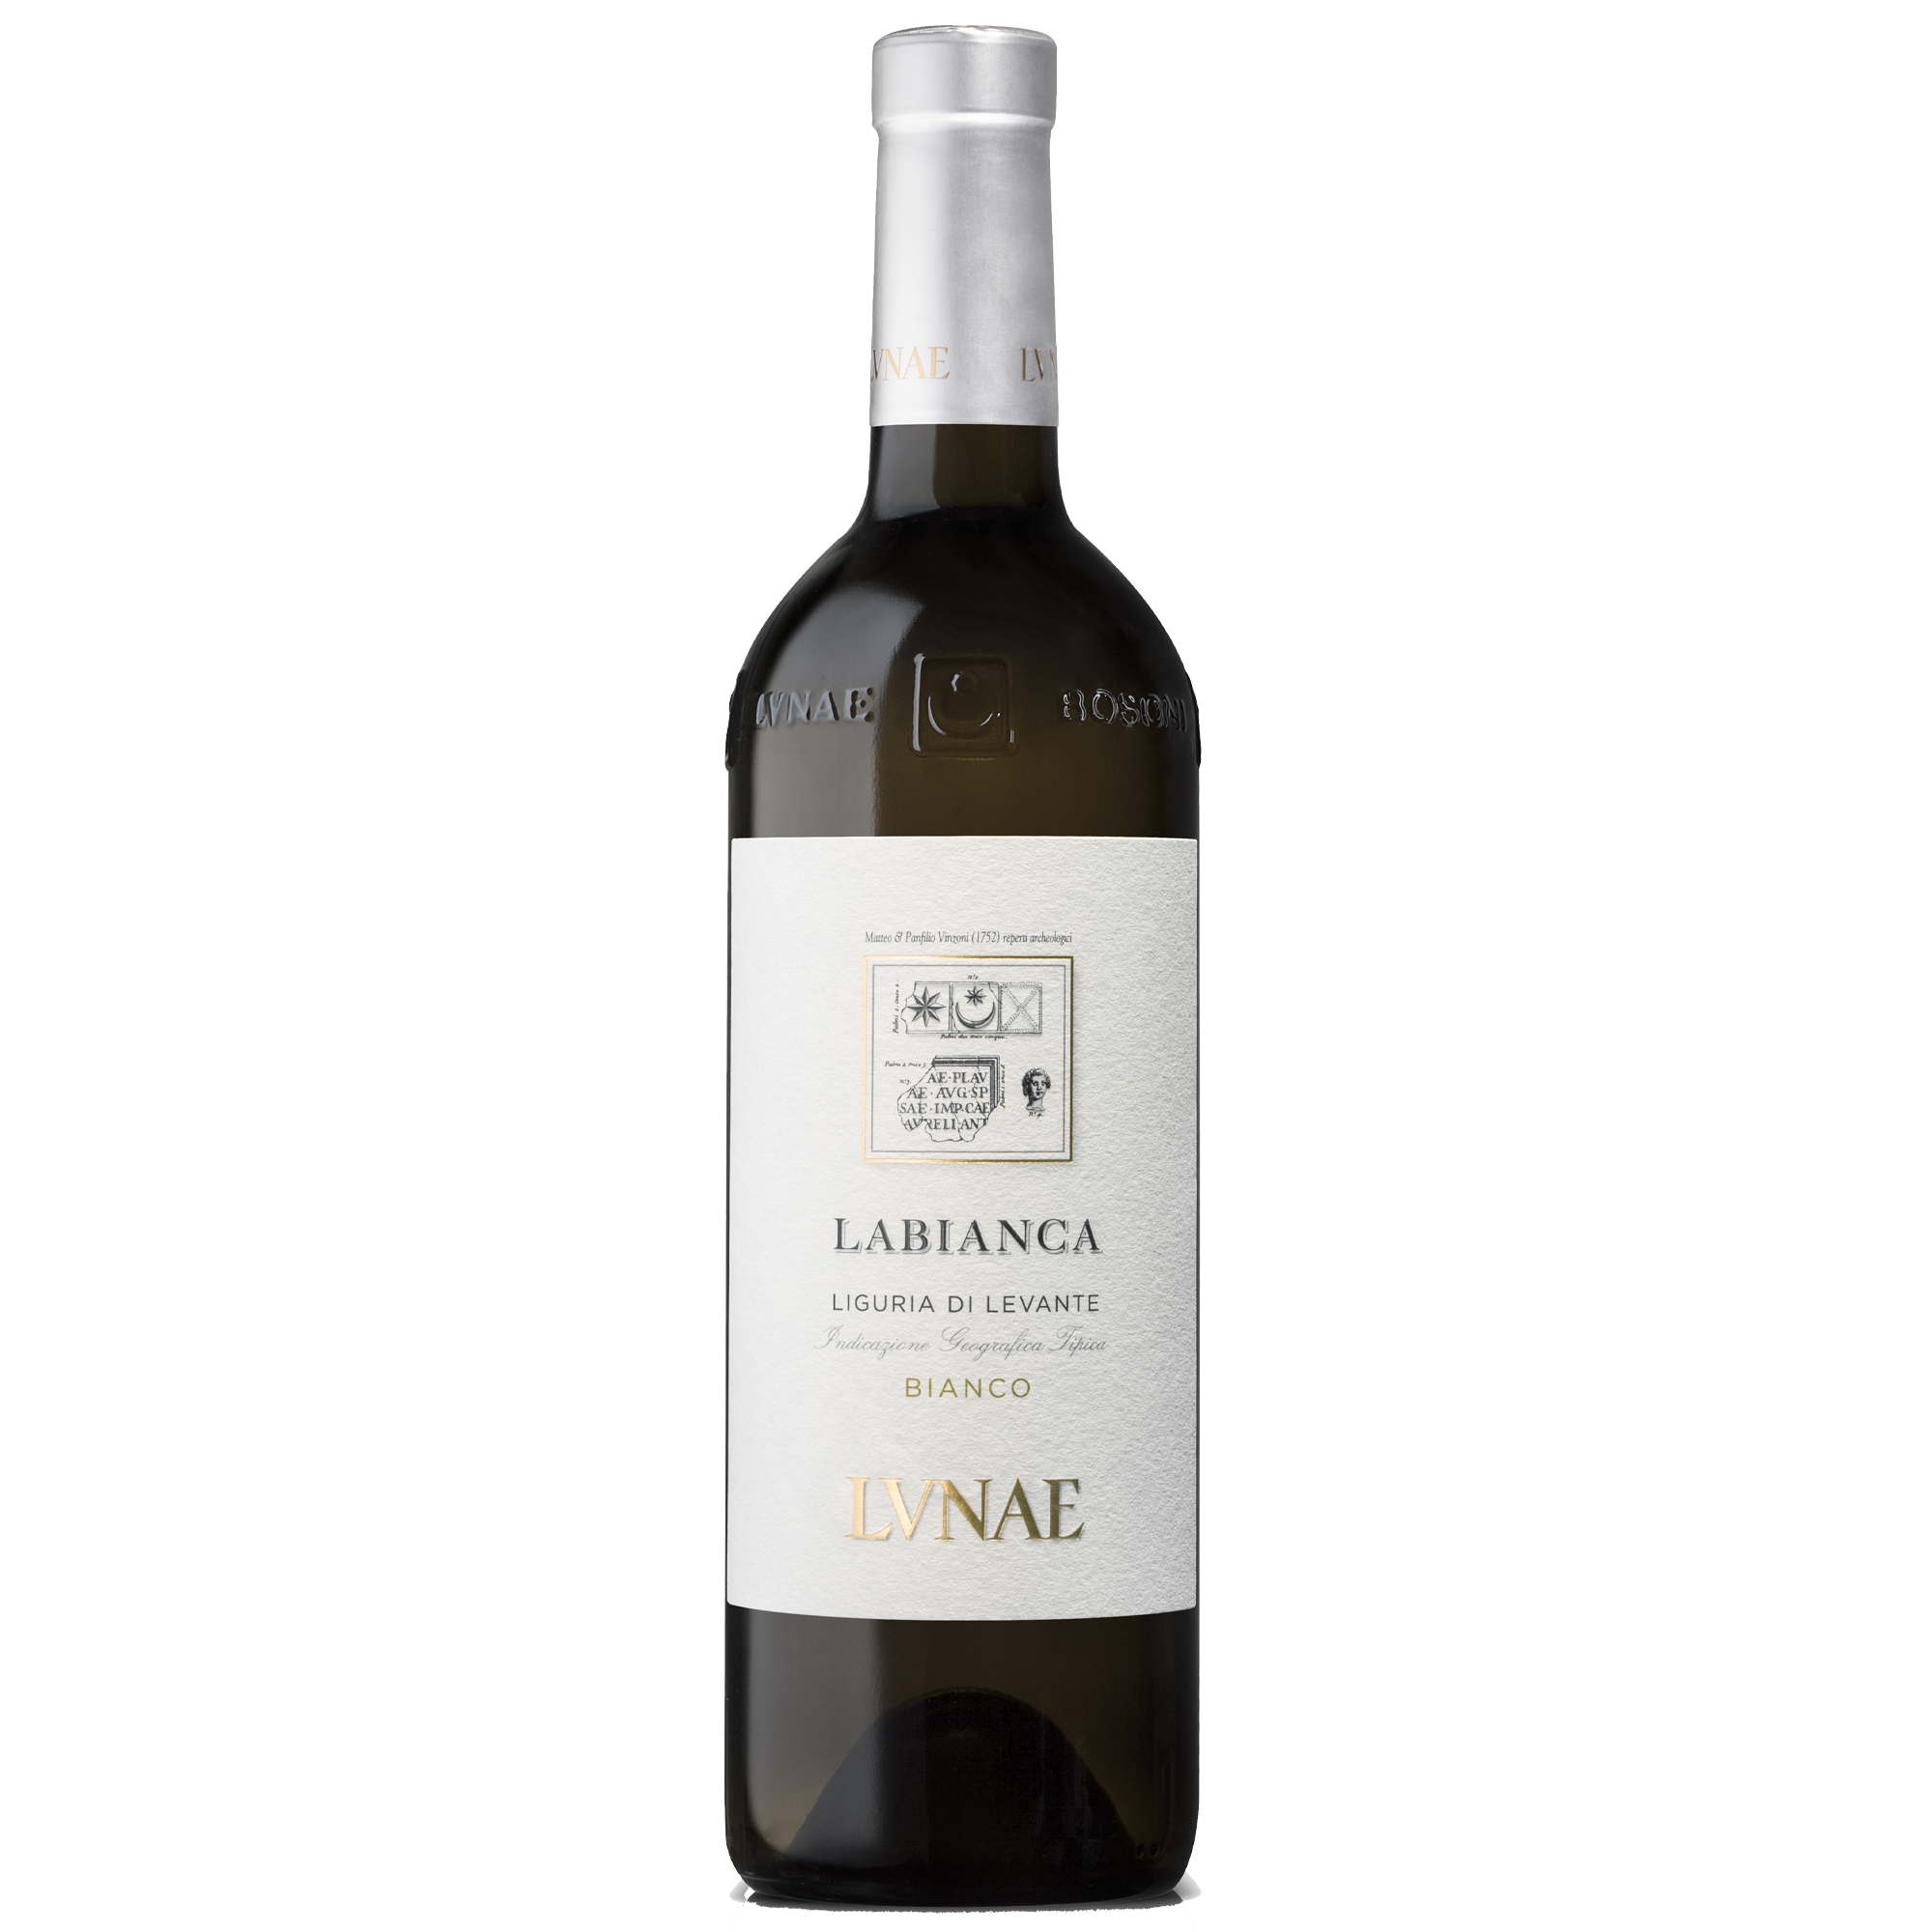 Trampe Lao Fyrretræ Liguria di Levante IGT "Labianca" 2020 - Vino Bianco Ligure Cantina Lunae